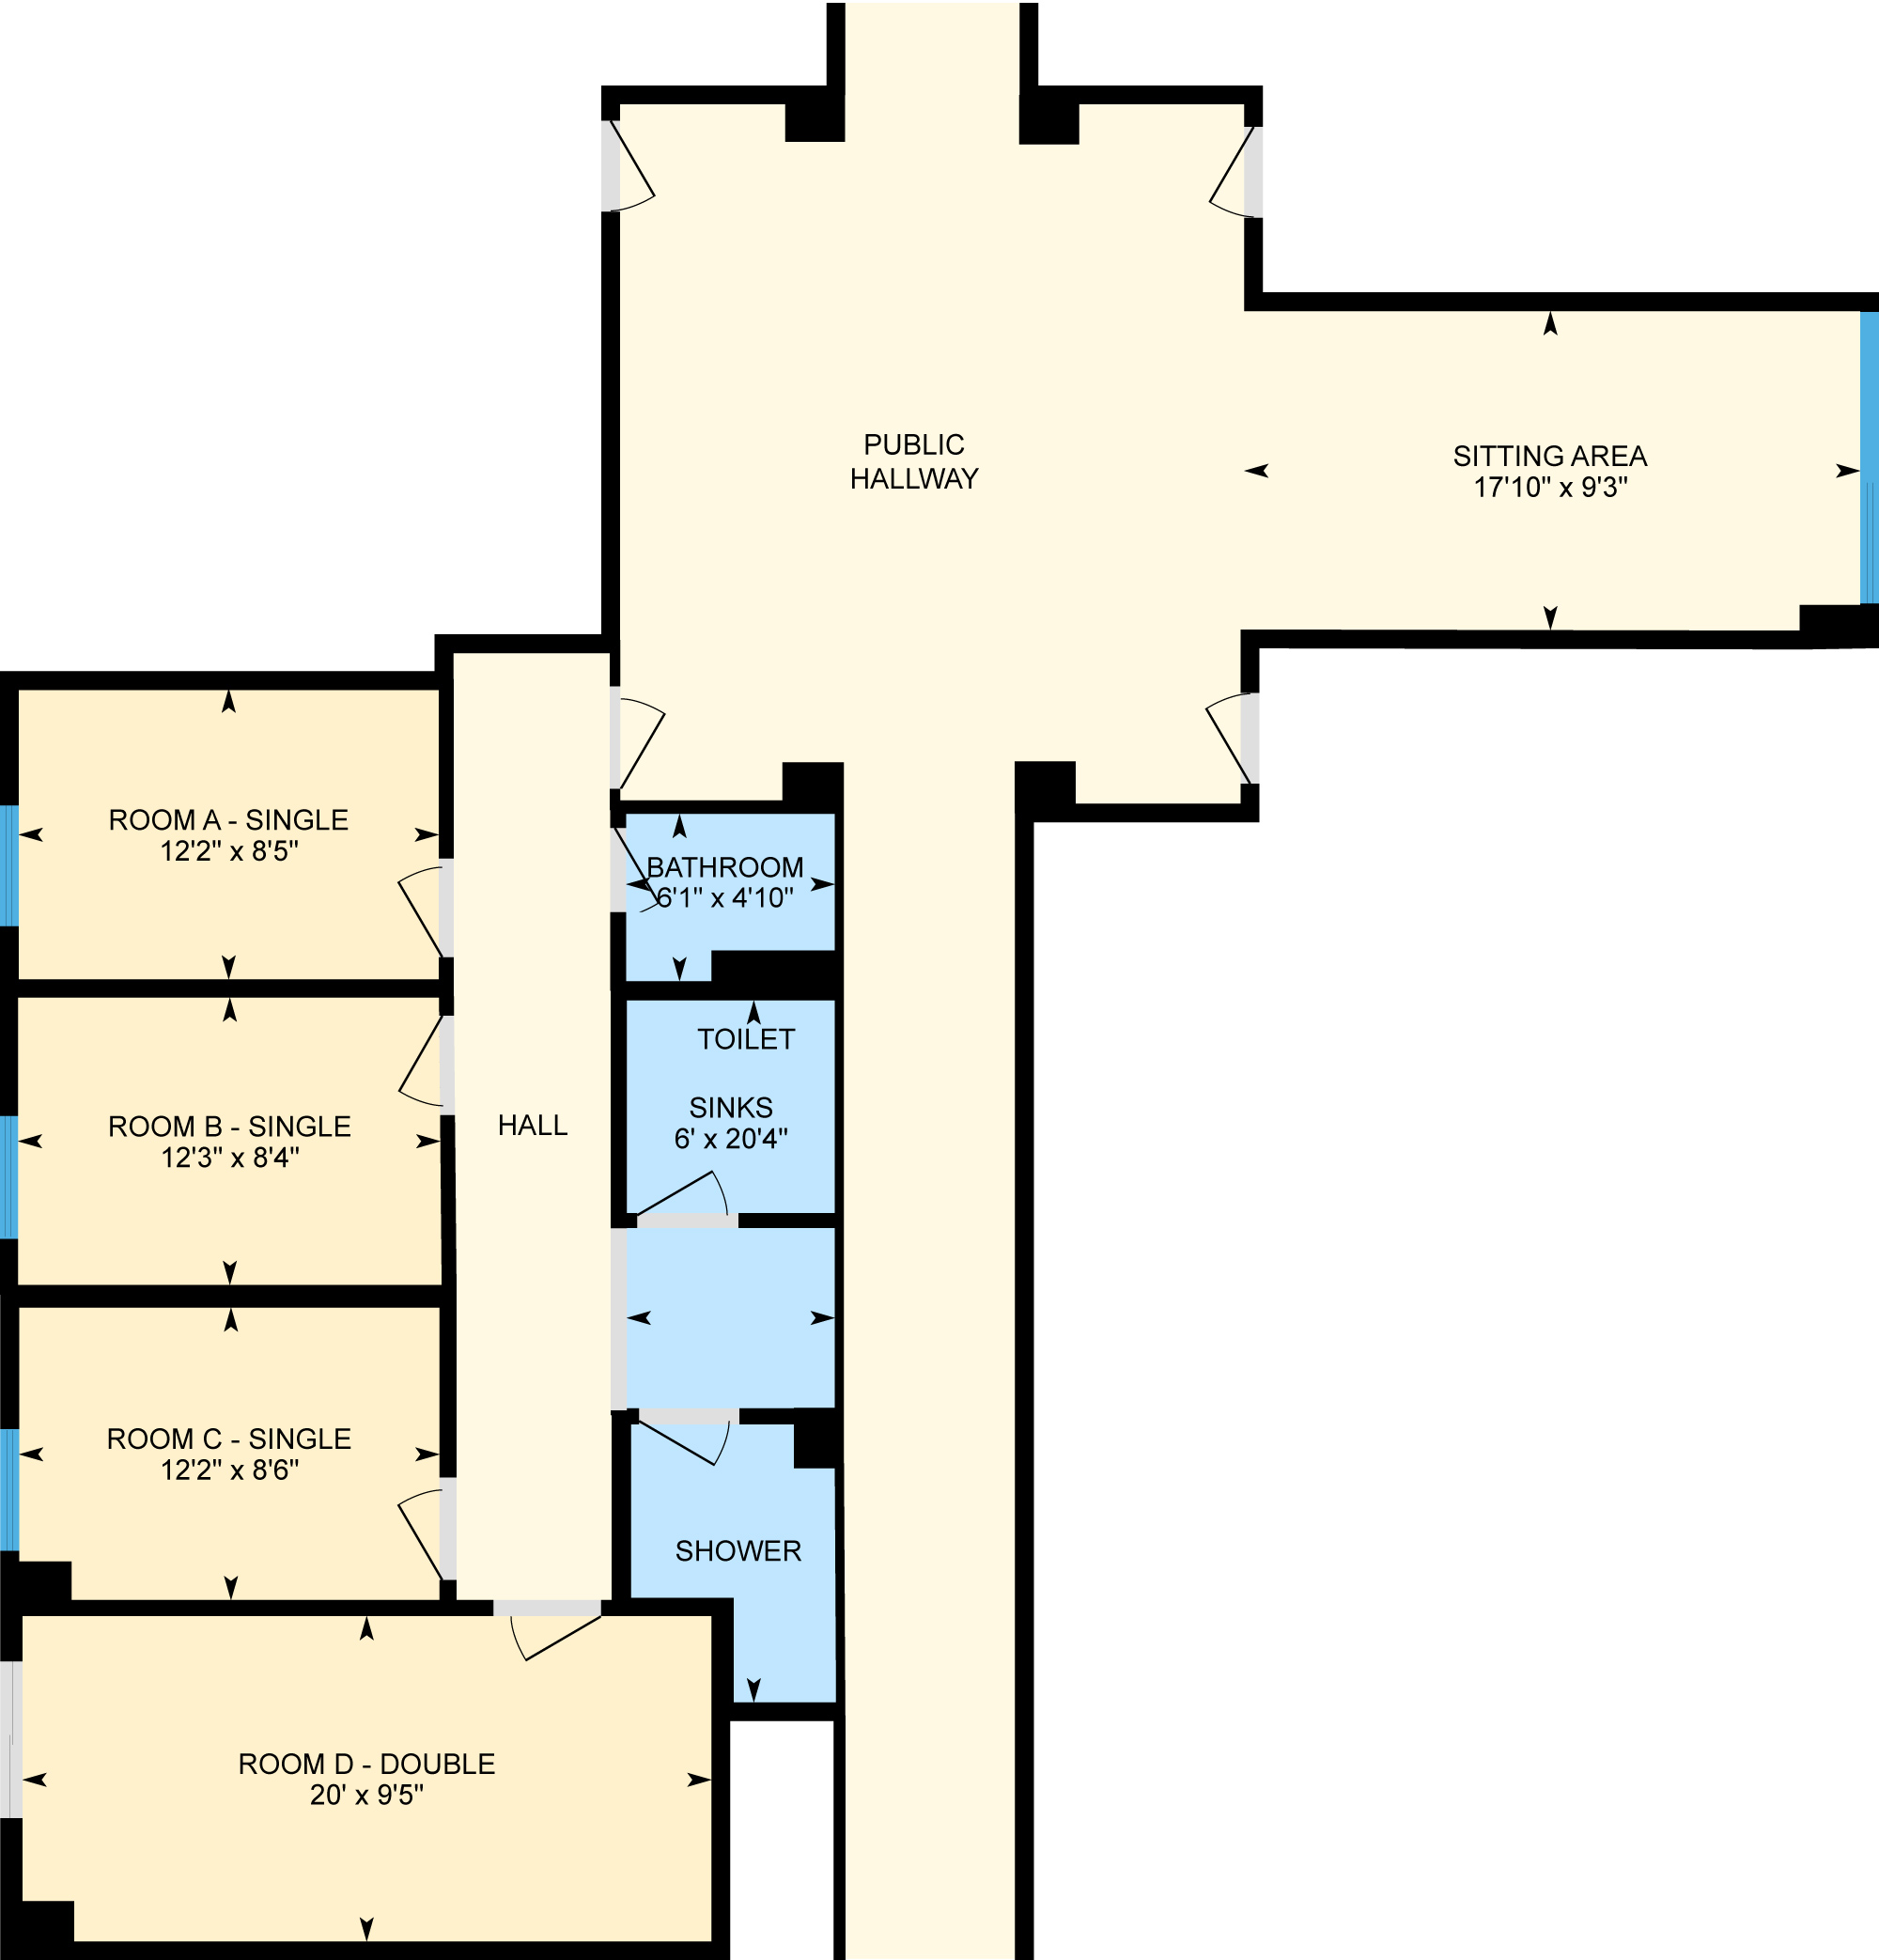 Floor plan from Toni Morrison Hall